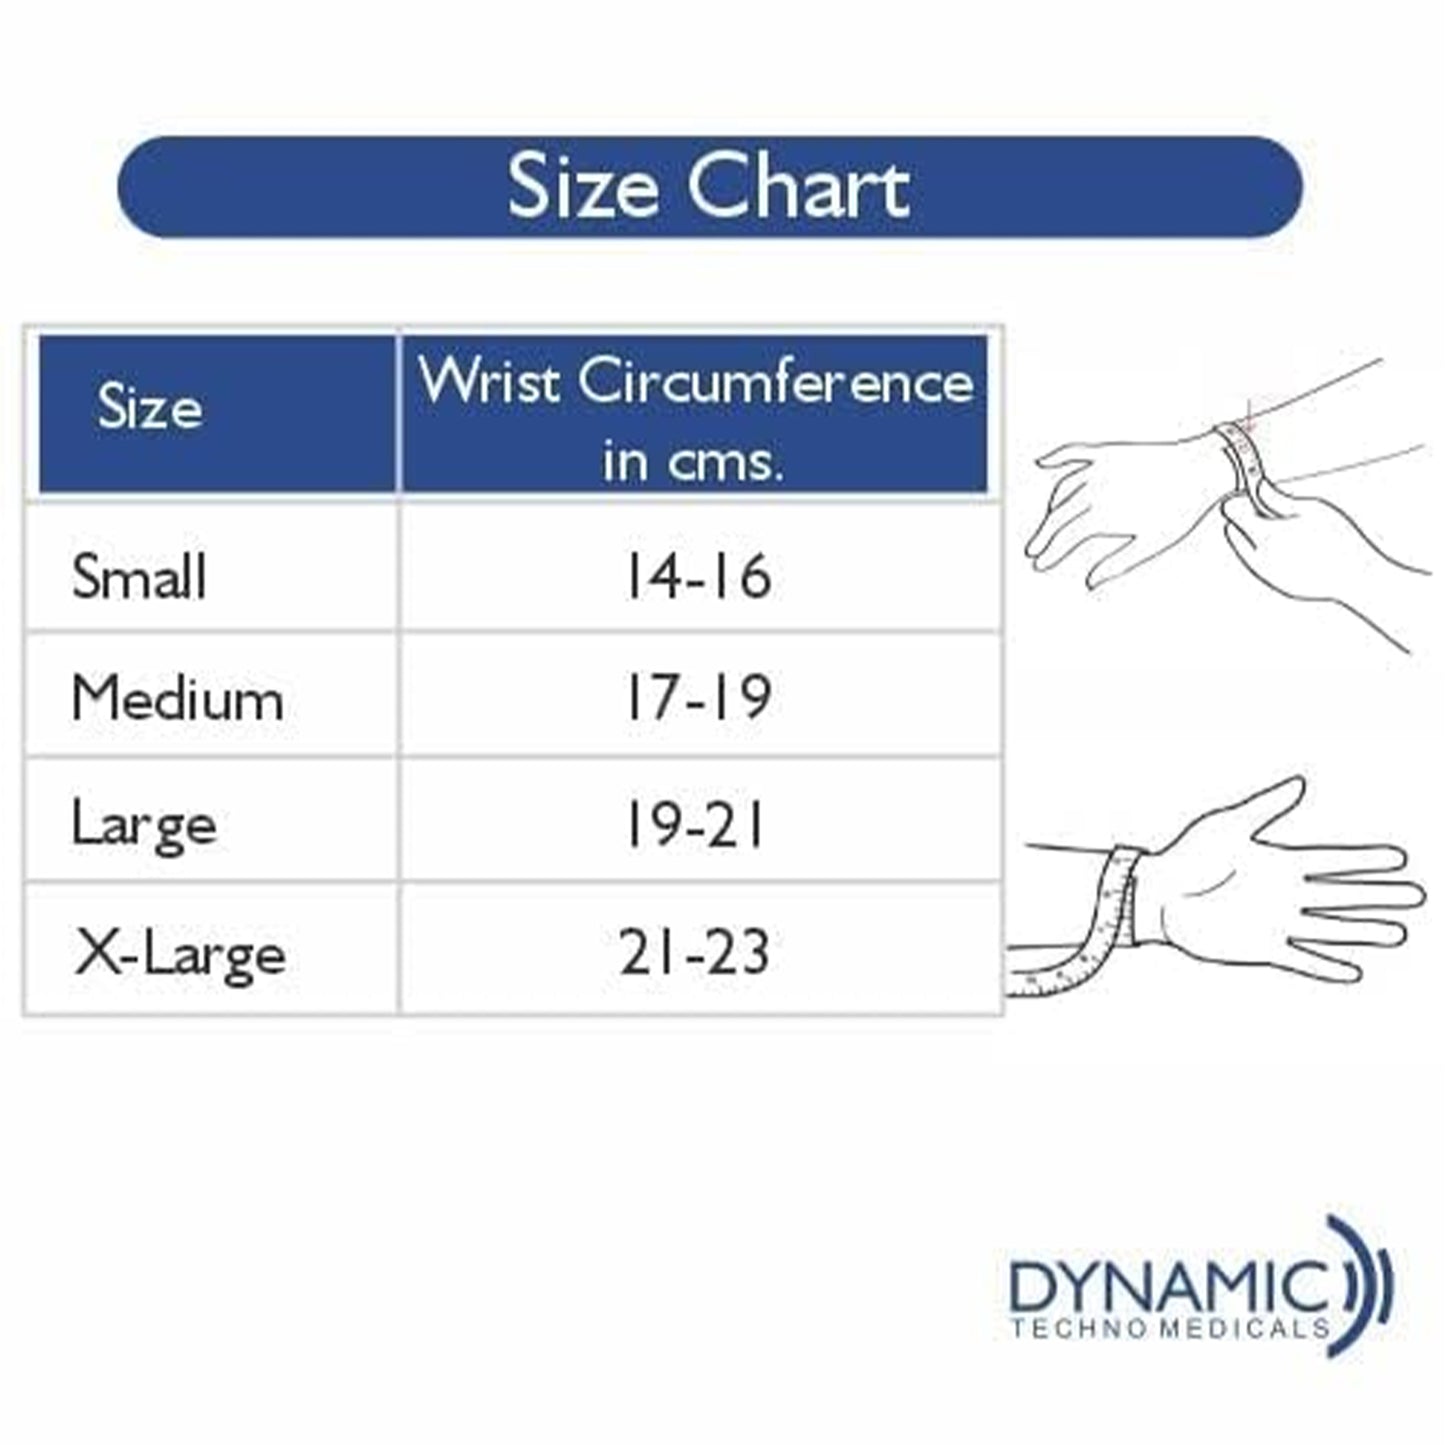 Dyna Wrist Brace 17-19 Cms (Medium) - Left Hand